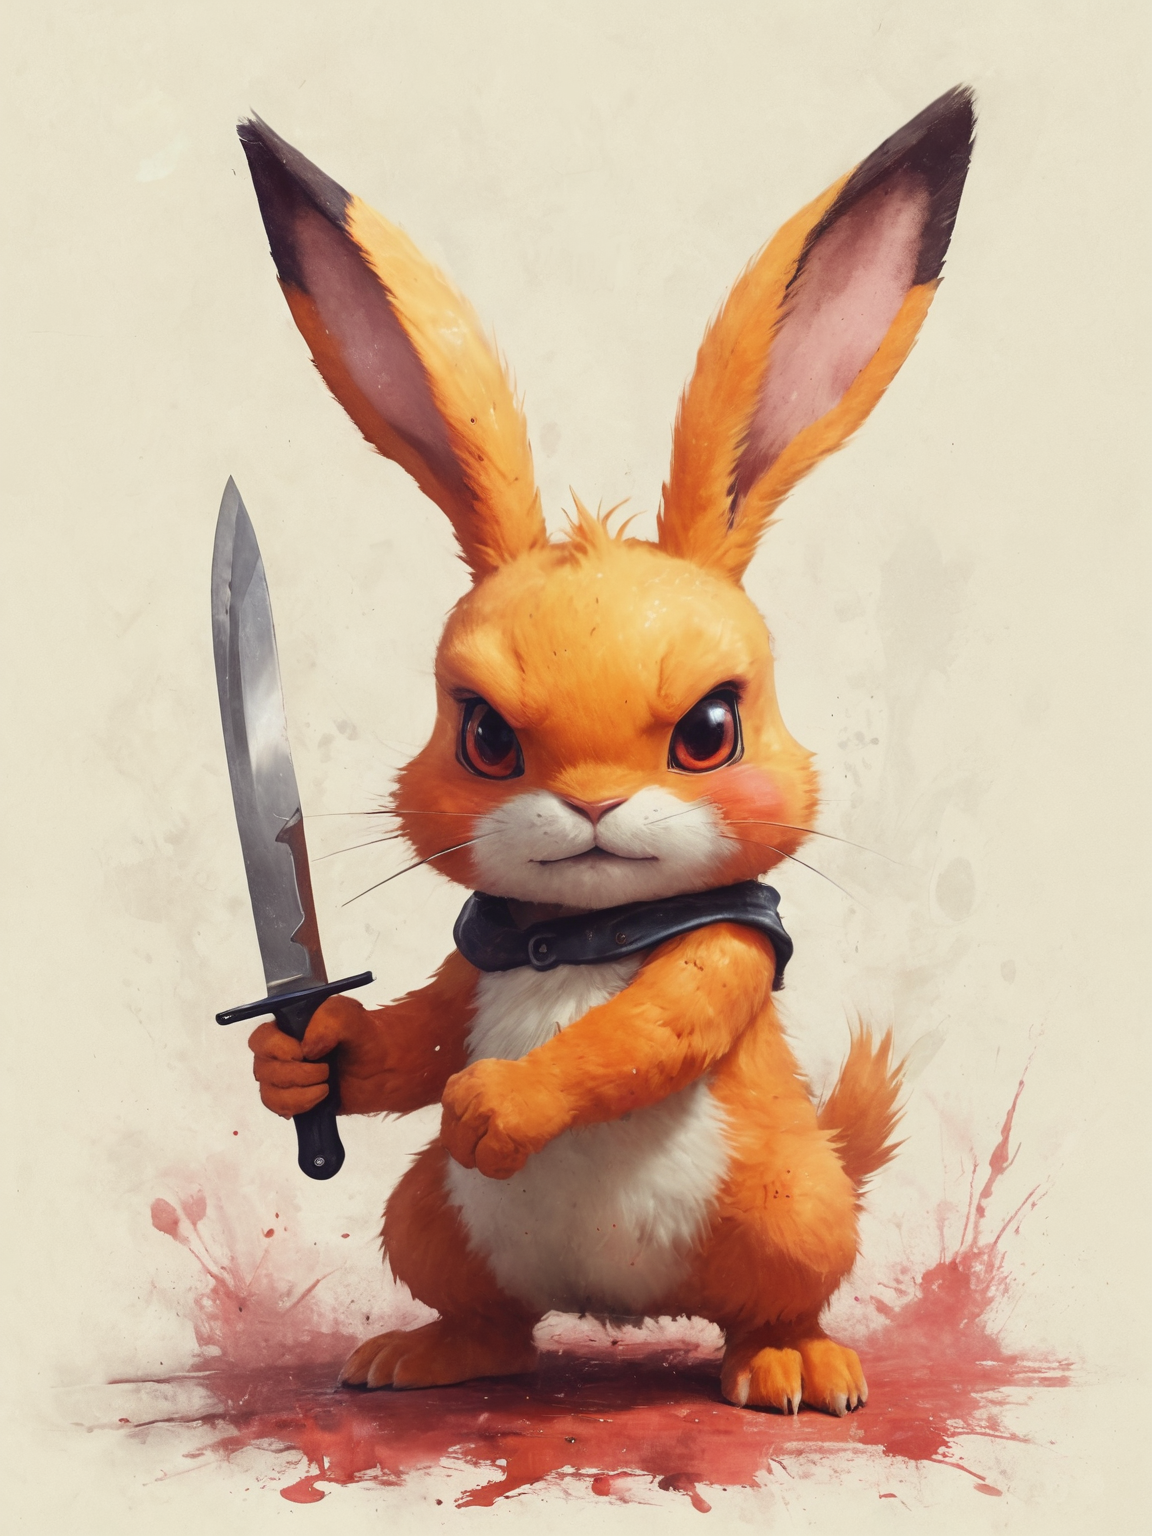 The angry rabbit holding knife , maniac, illustration, <lora:Desolation:0.6>